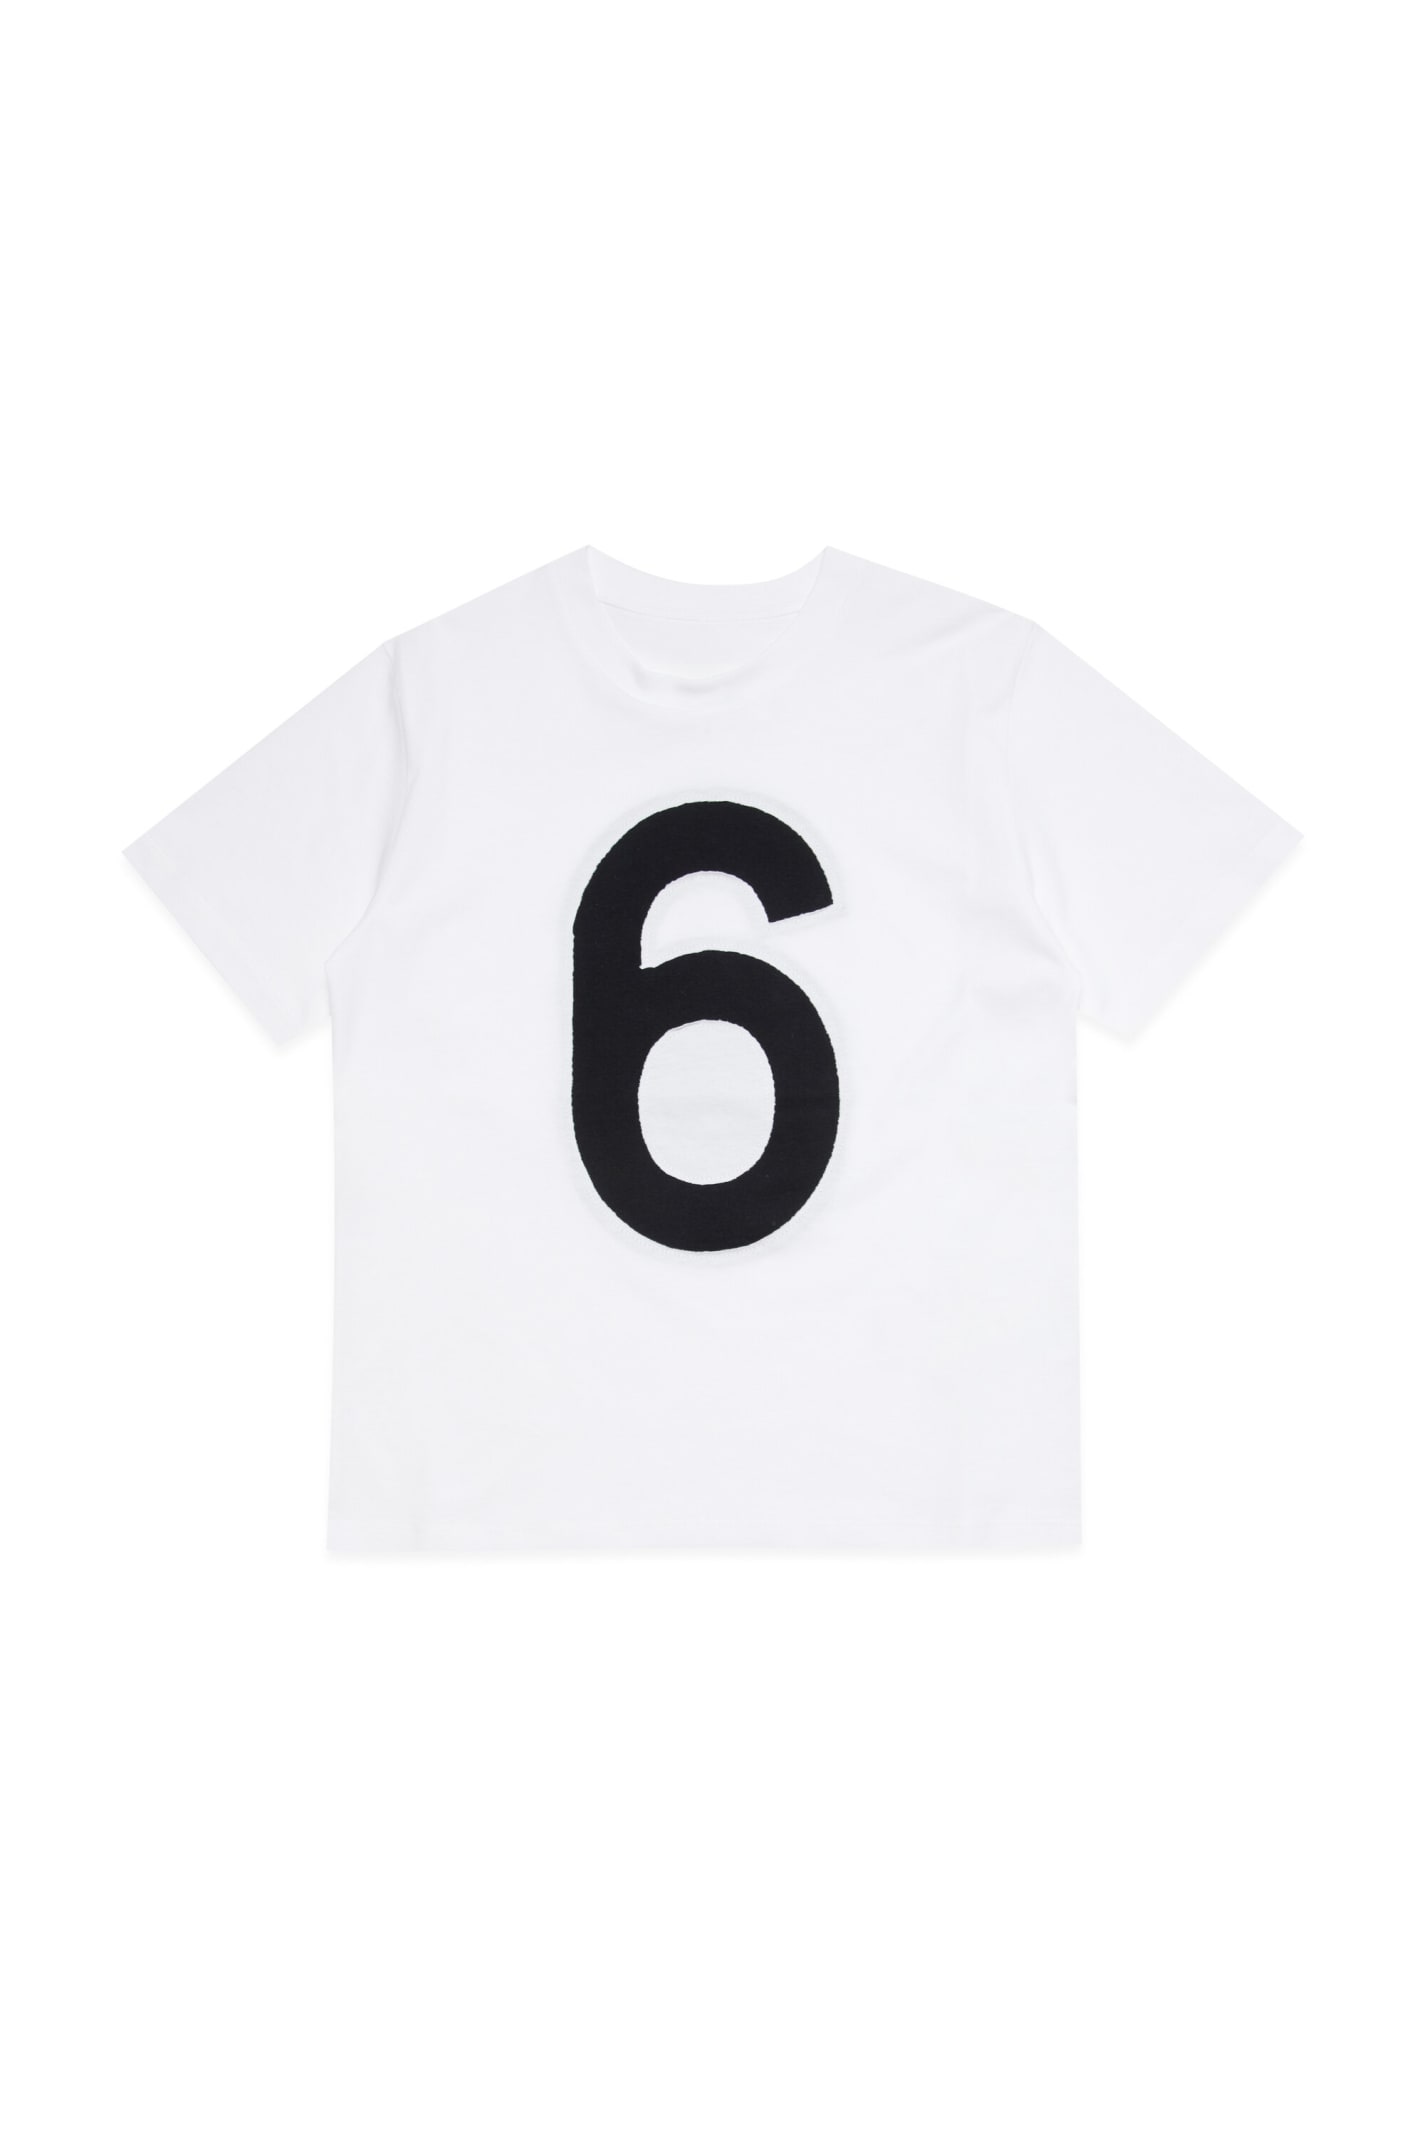 Maison Margiela Babies' Mm6t88u T-shirt  Inlay 6 Logo T-shirt In White